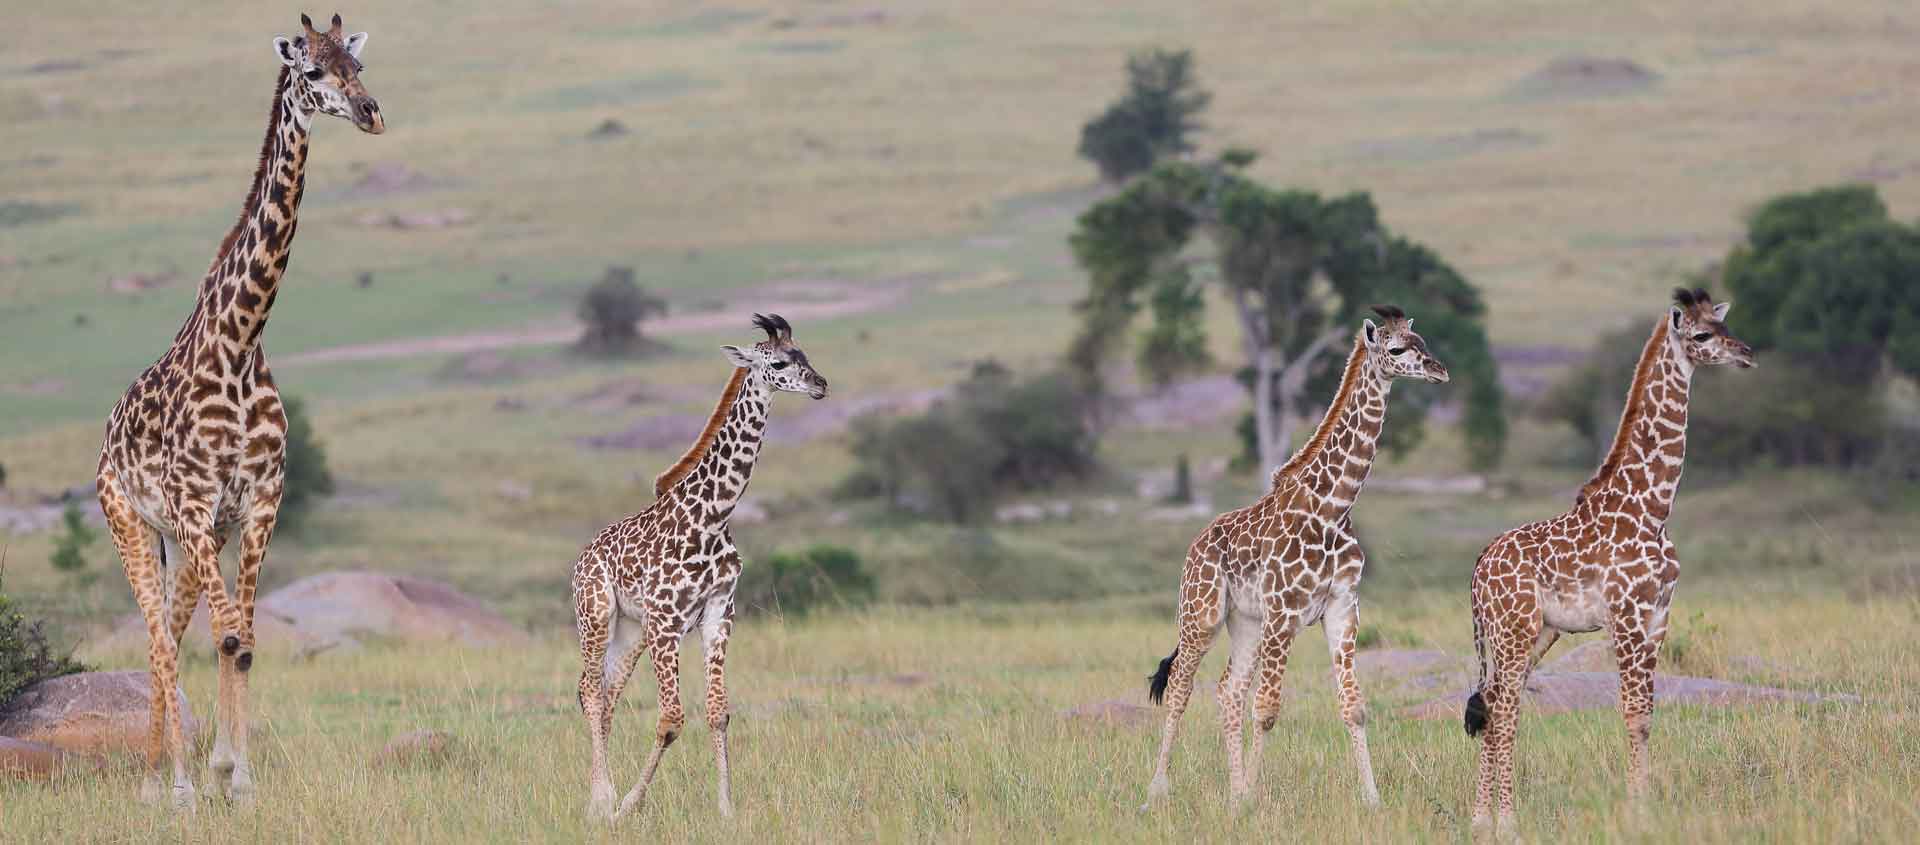 Tanzania safari of the Serengeti and Mahale image of giraffes